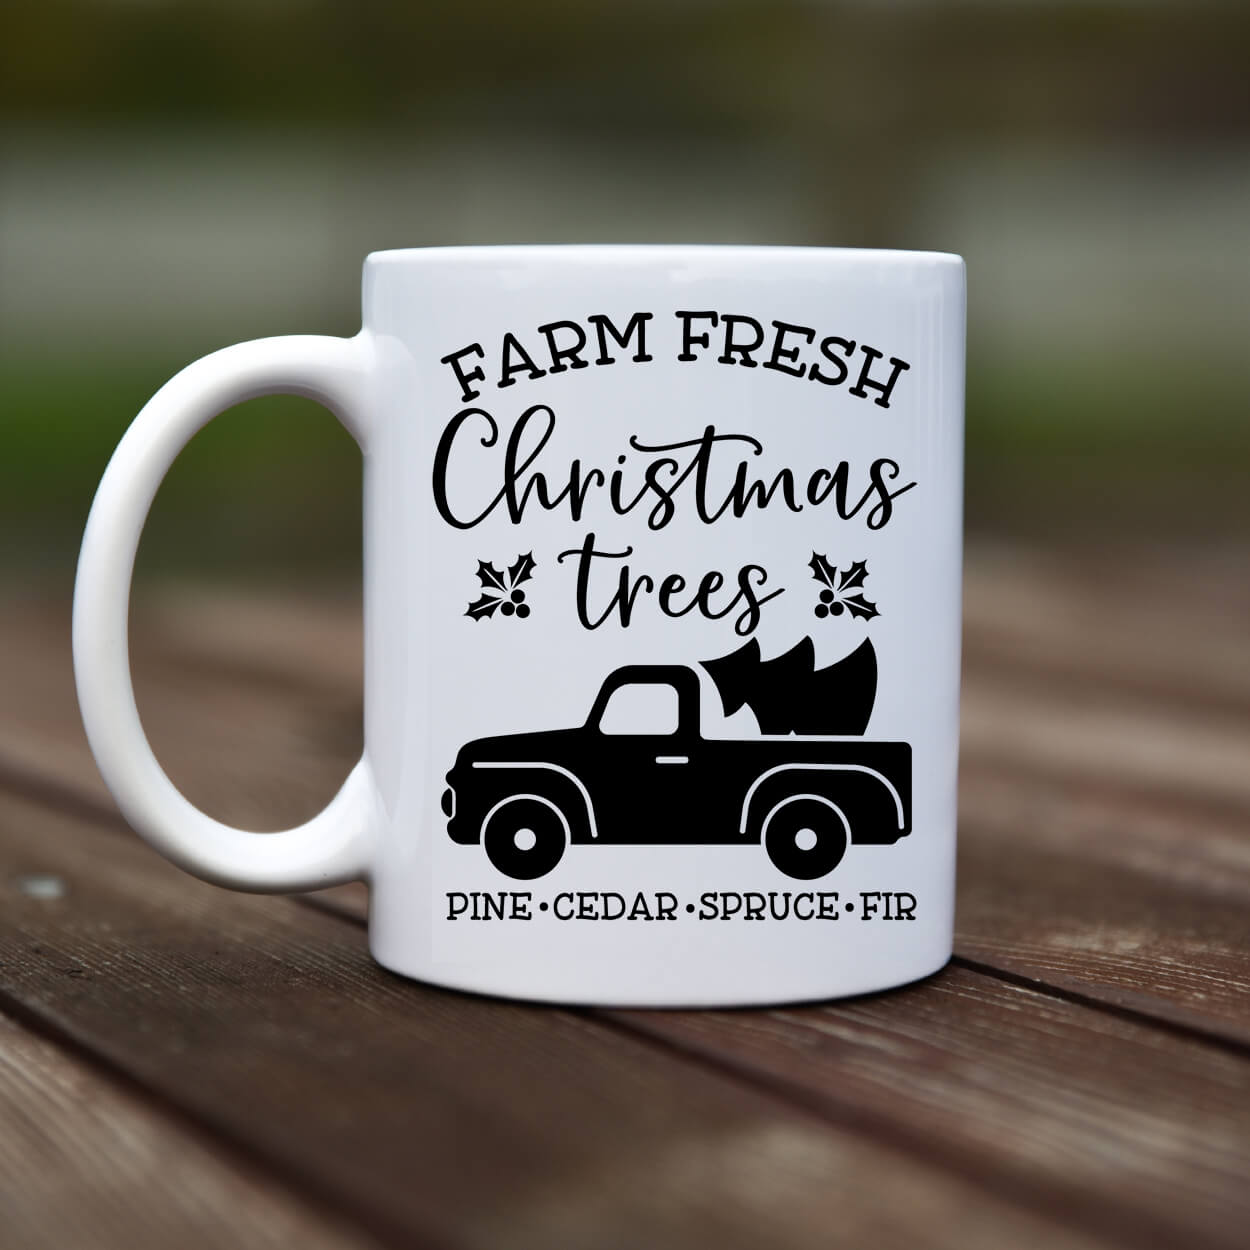 Mug - Farm fresh christmas trees 2 - rvdesignprint